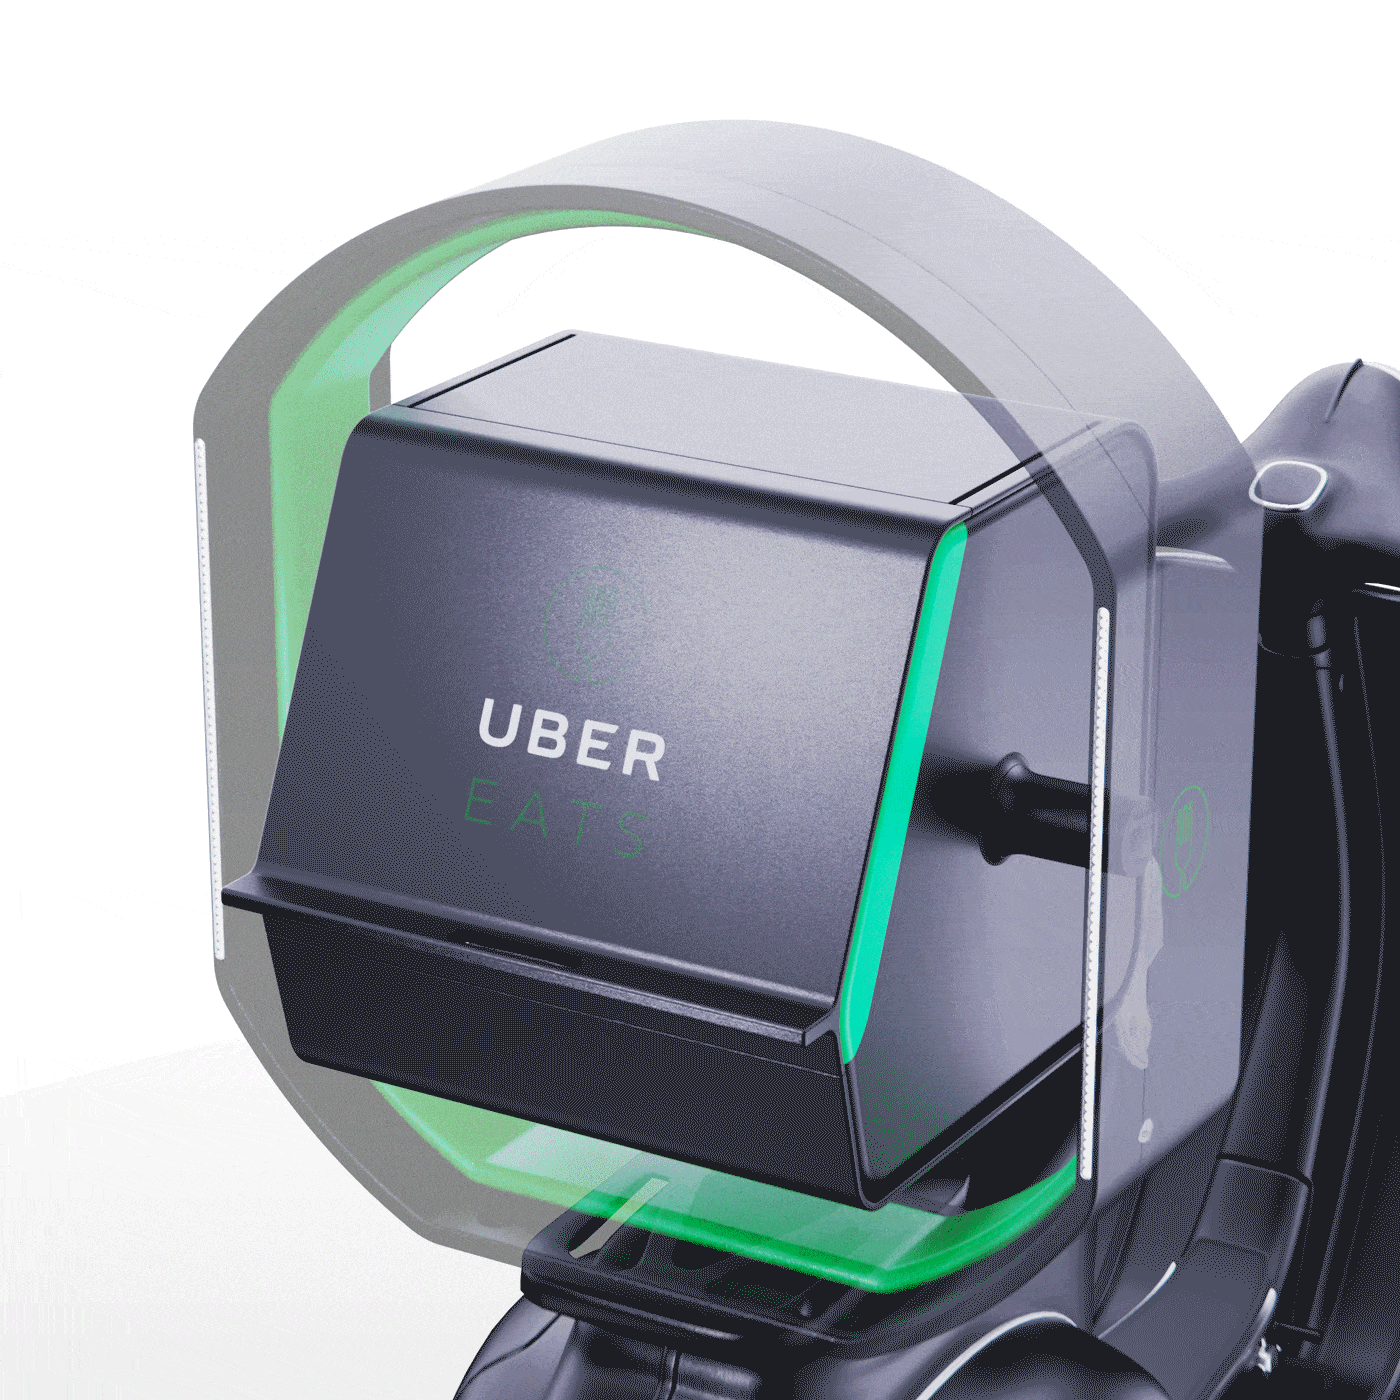 Uber Balance System for Uber Eats Scooter